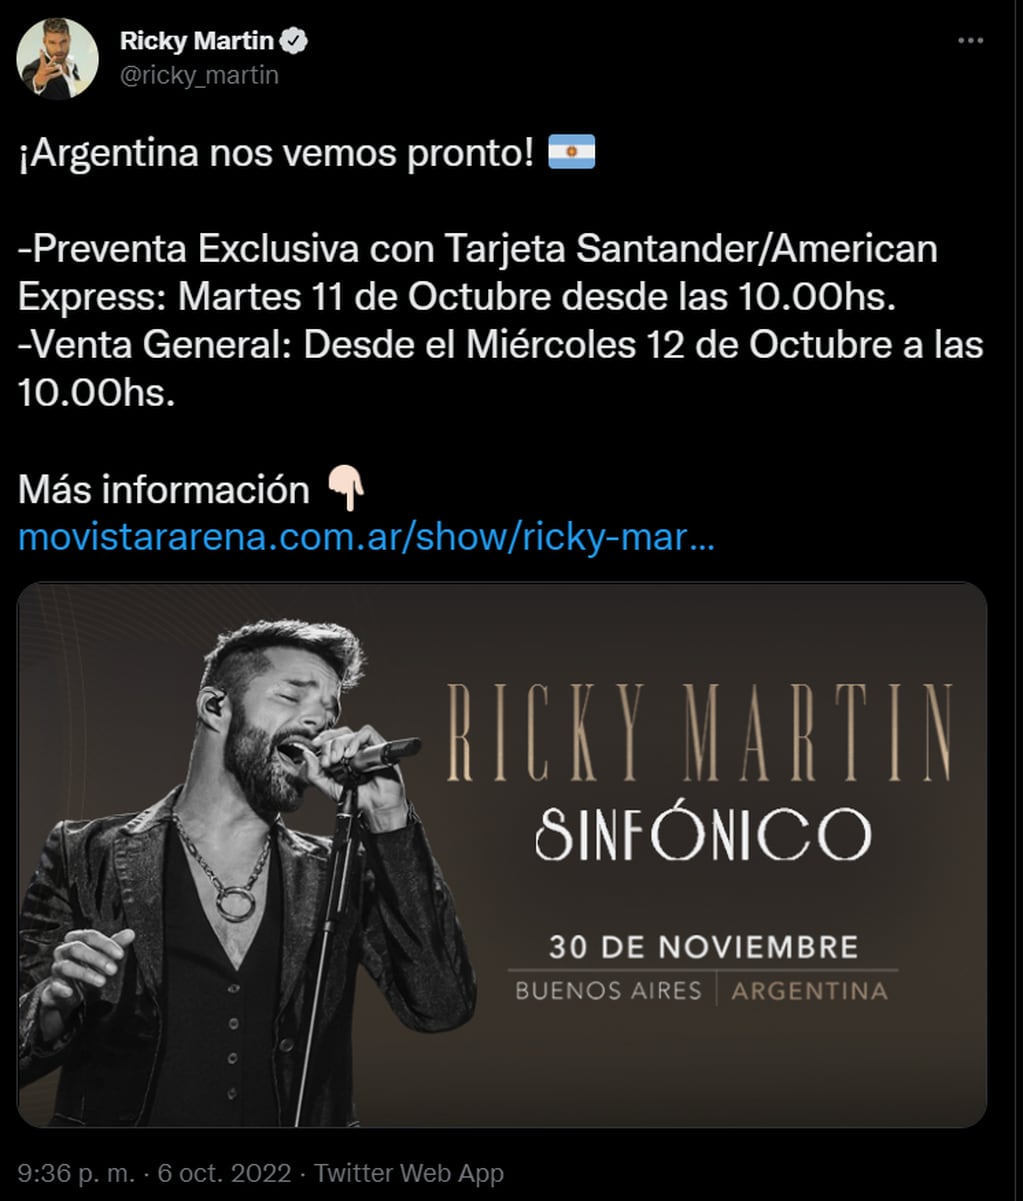 El músico anunció la fecha de su show en Argentina